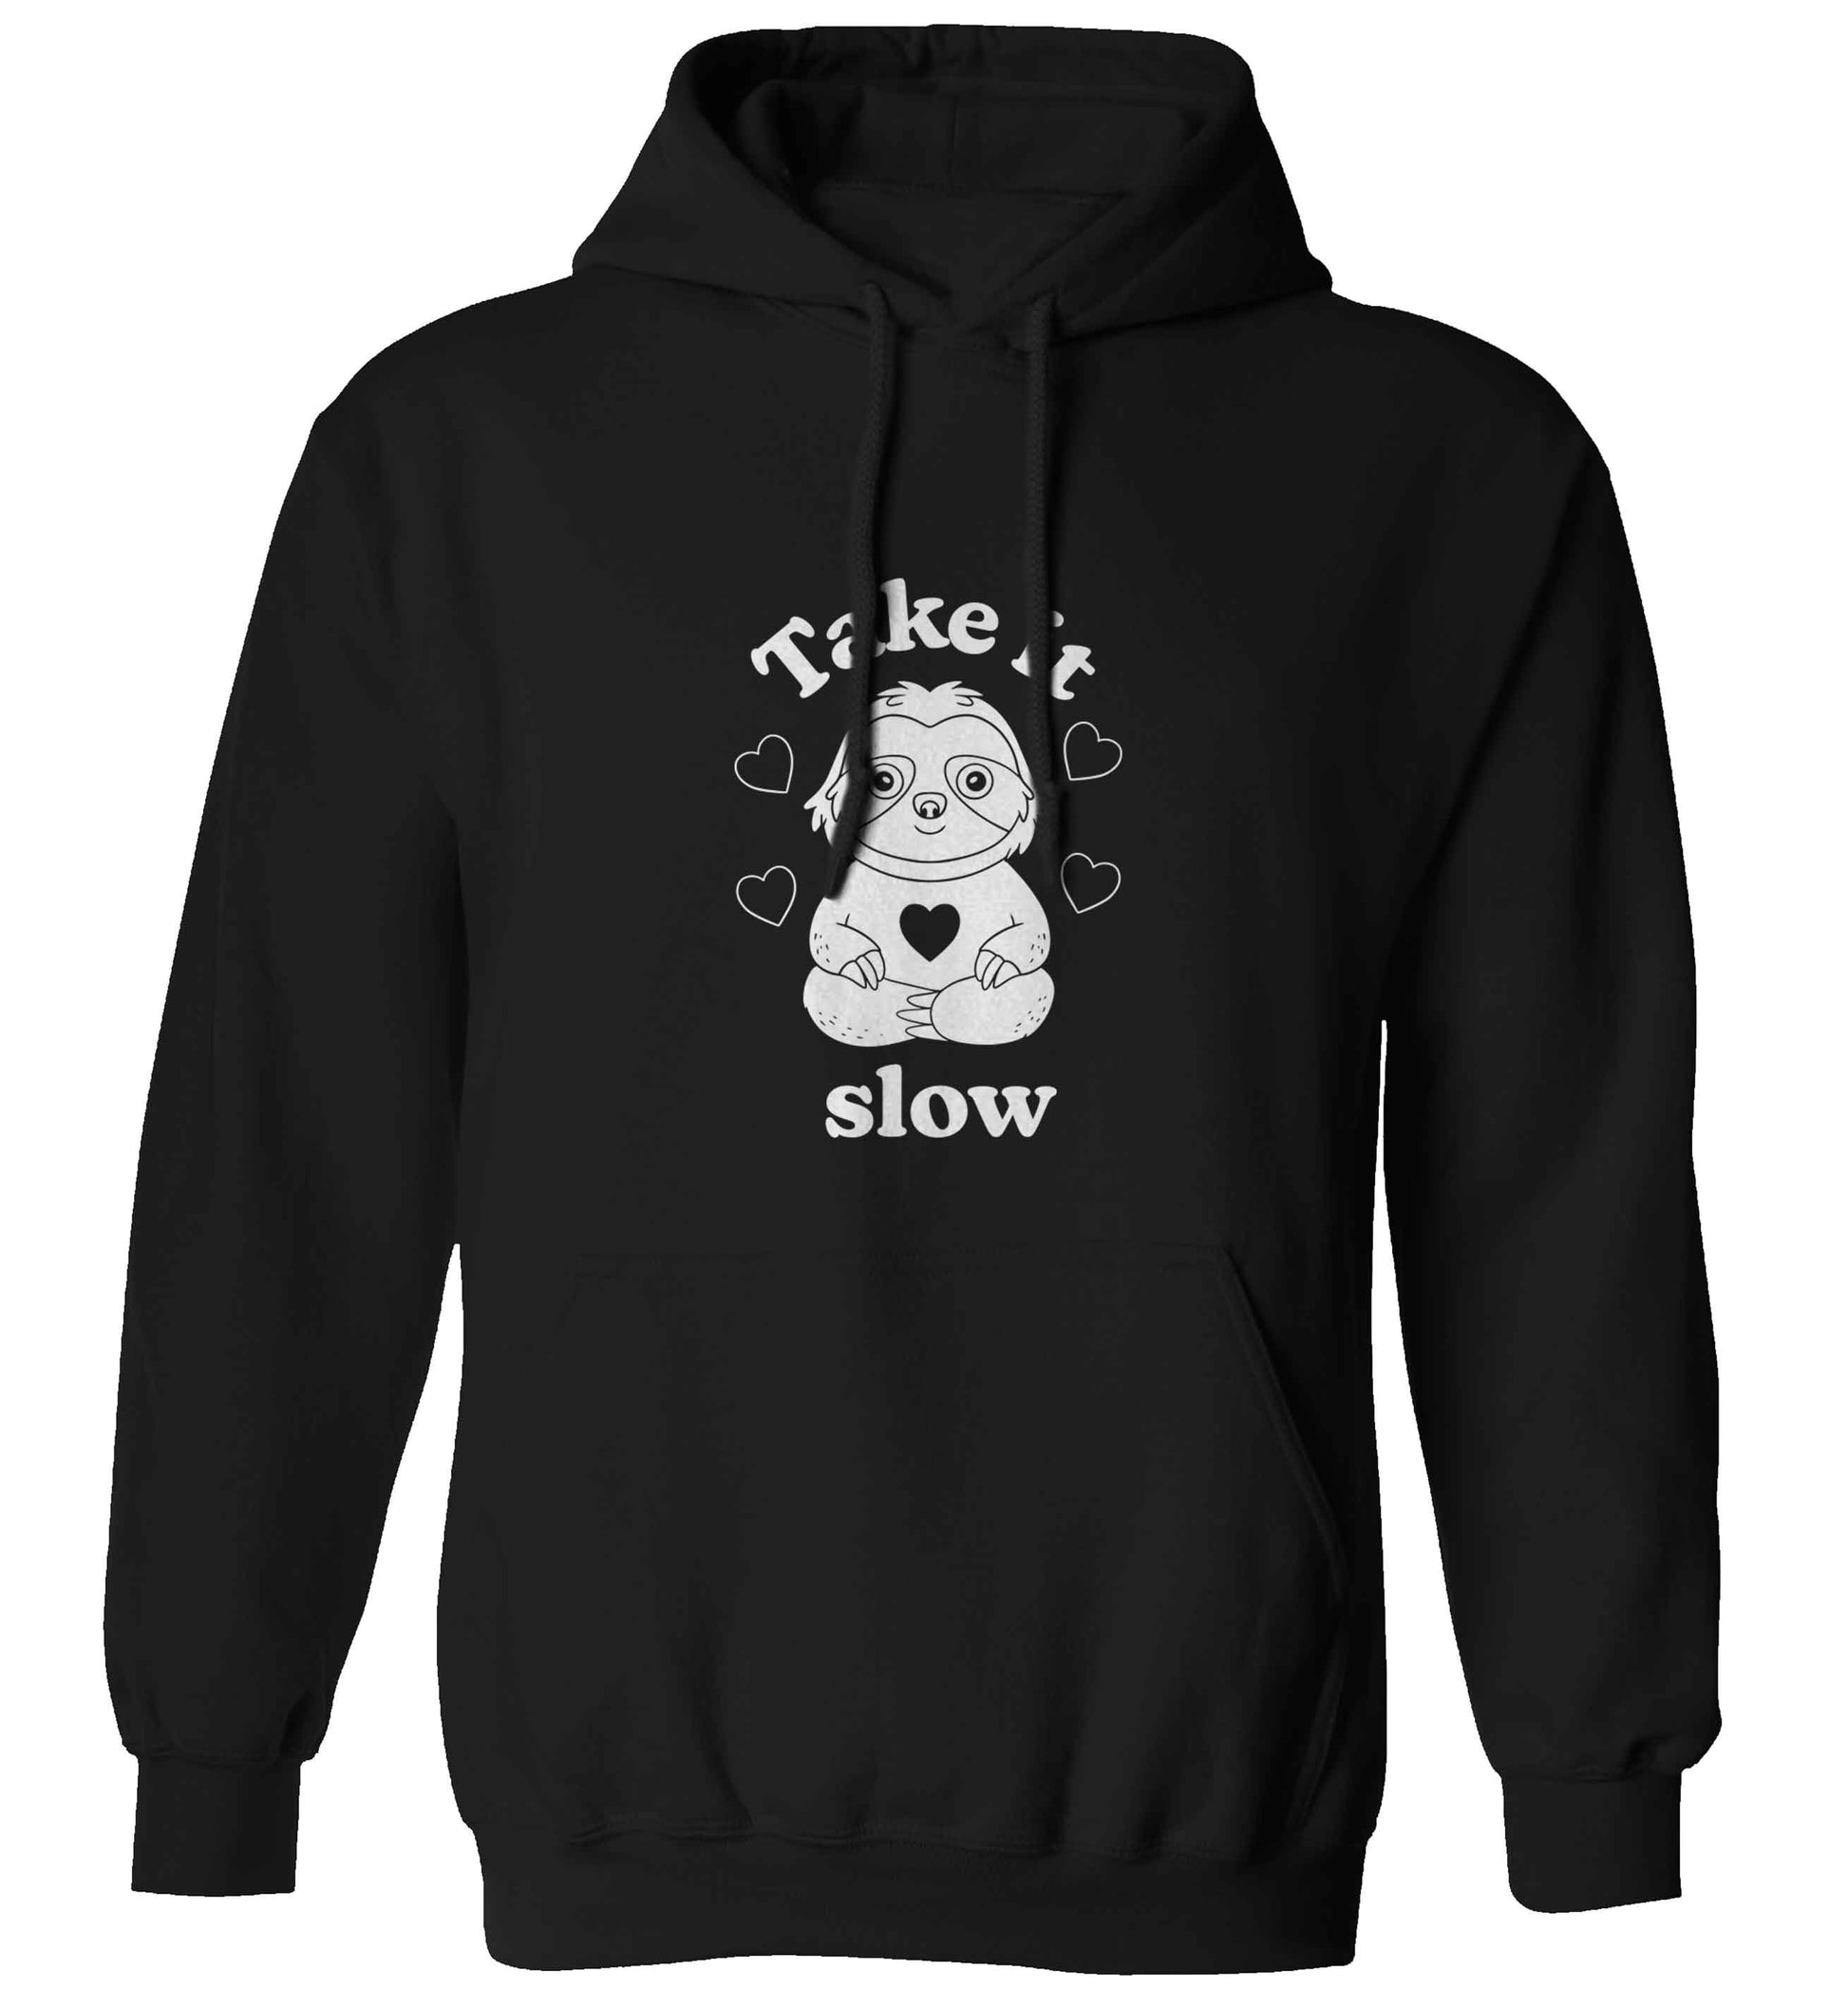 Take it slow adults unisex black hoodie 2XL